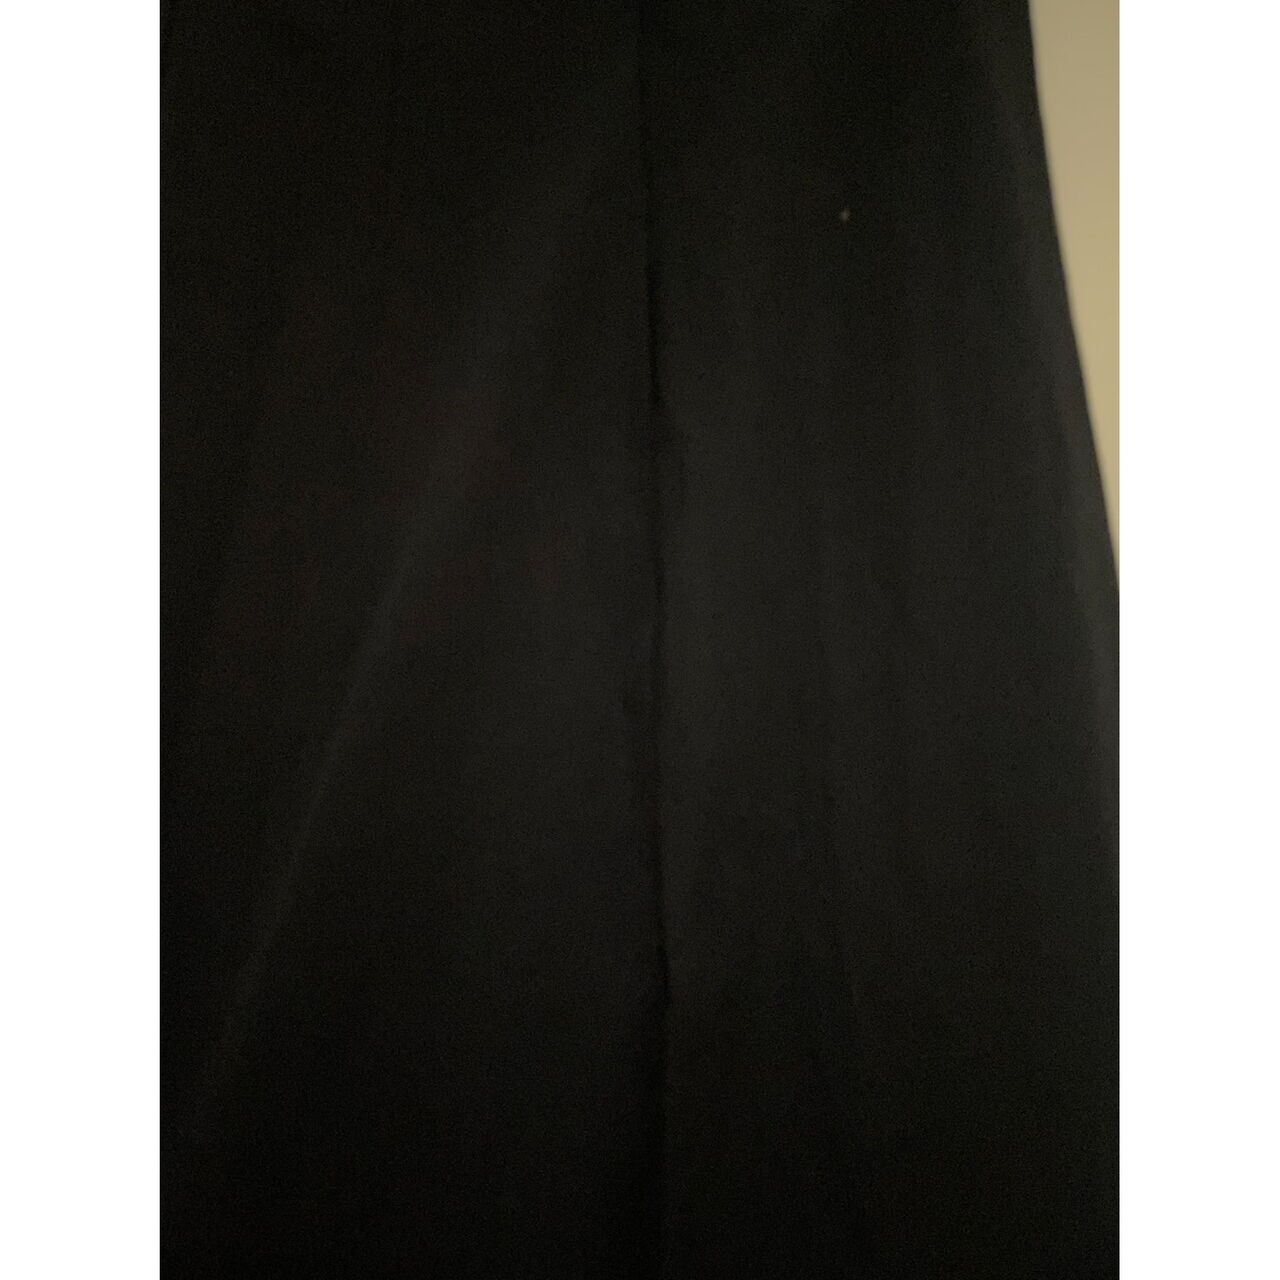 Uniqlo Black Midi Skirt